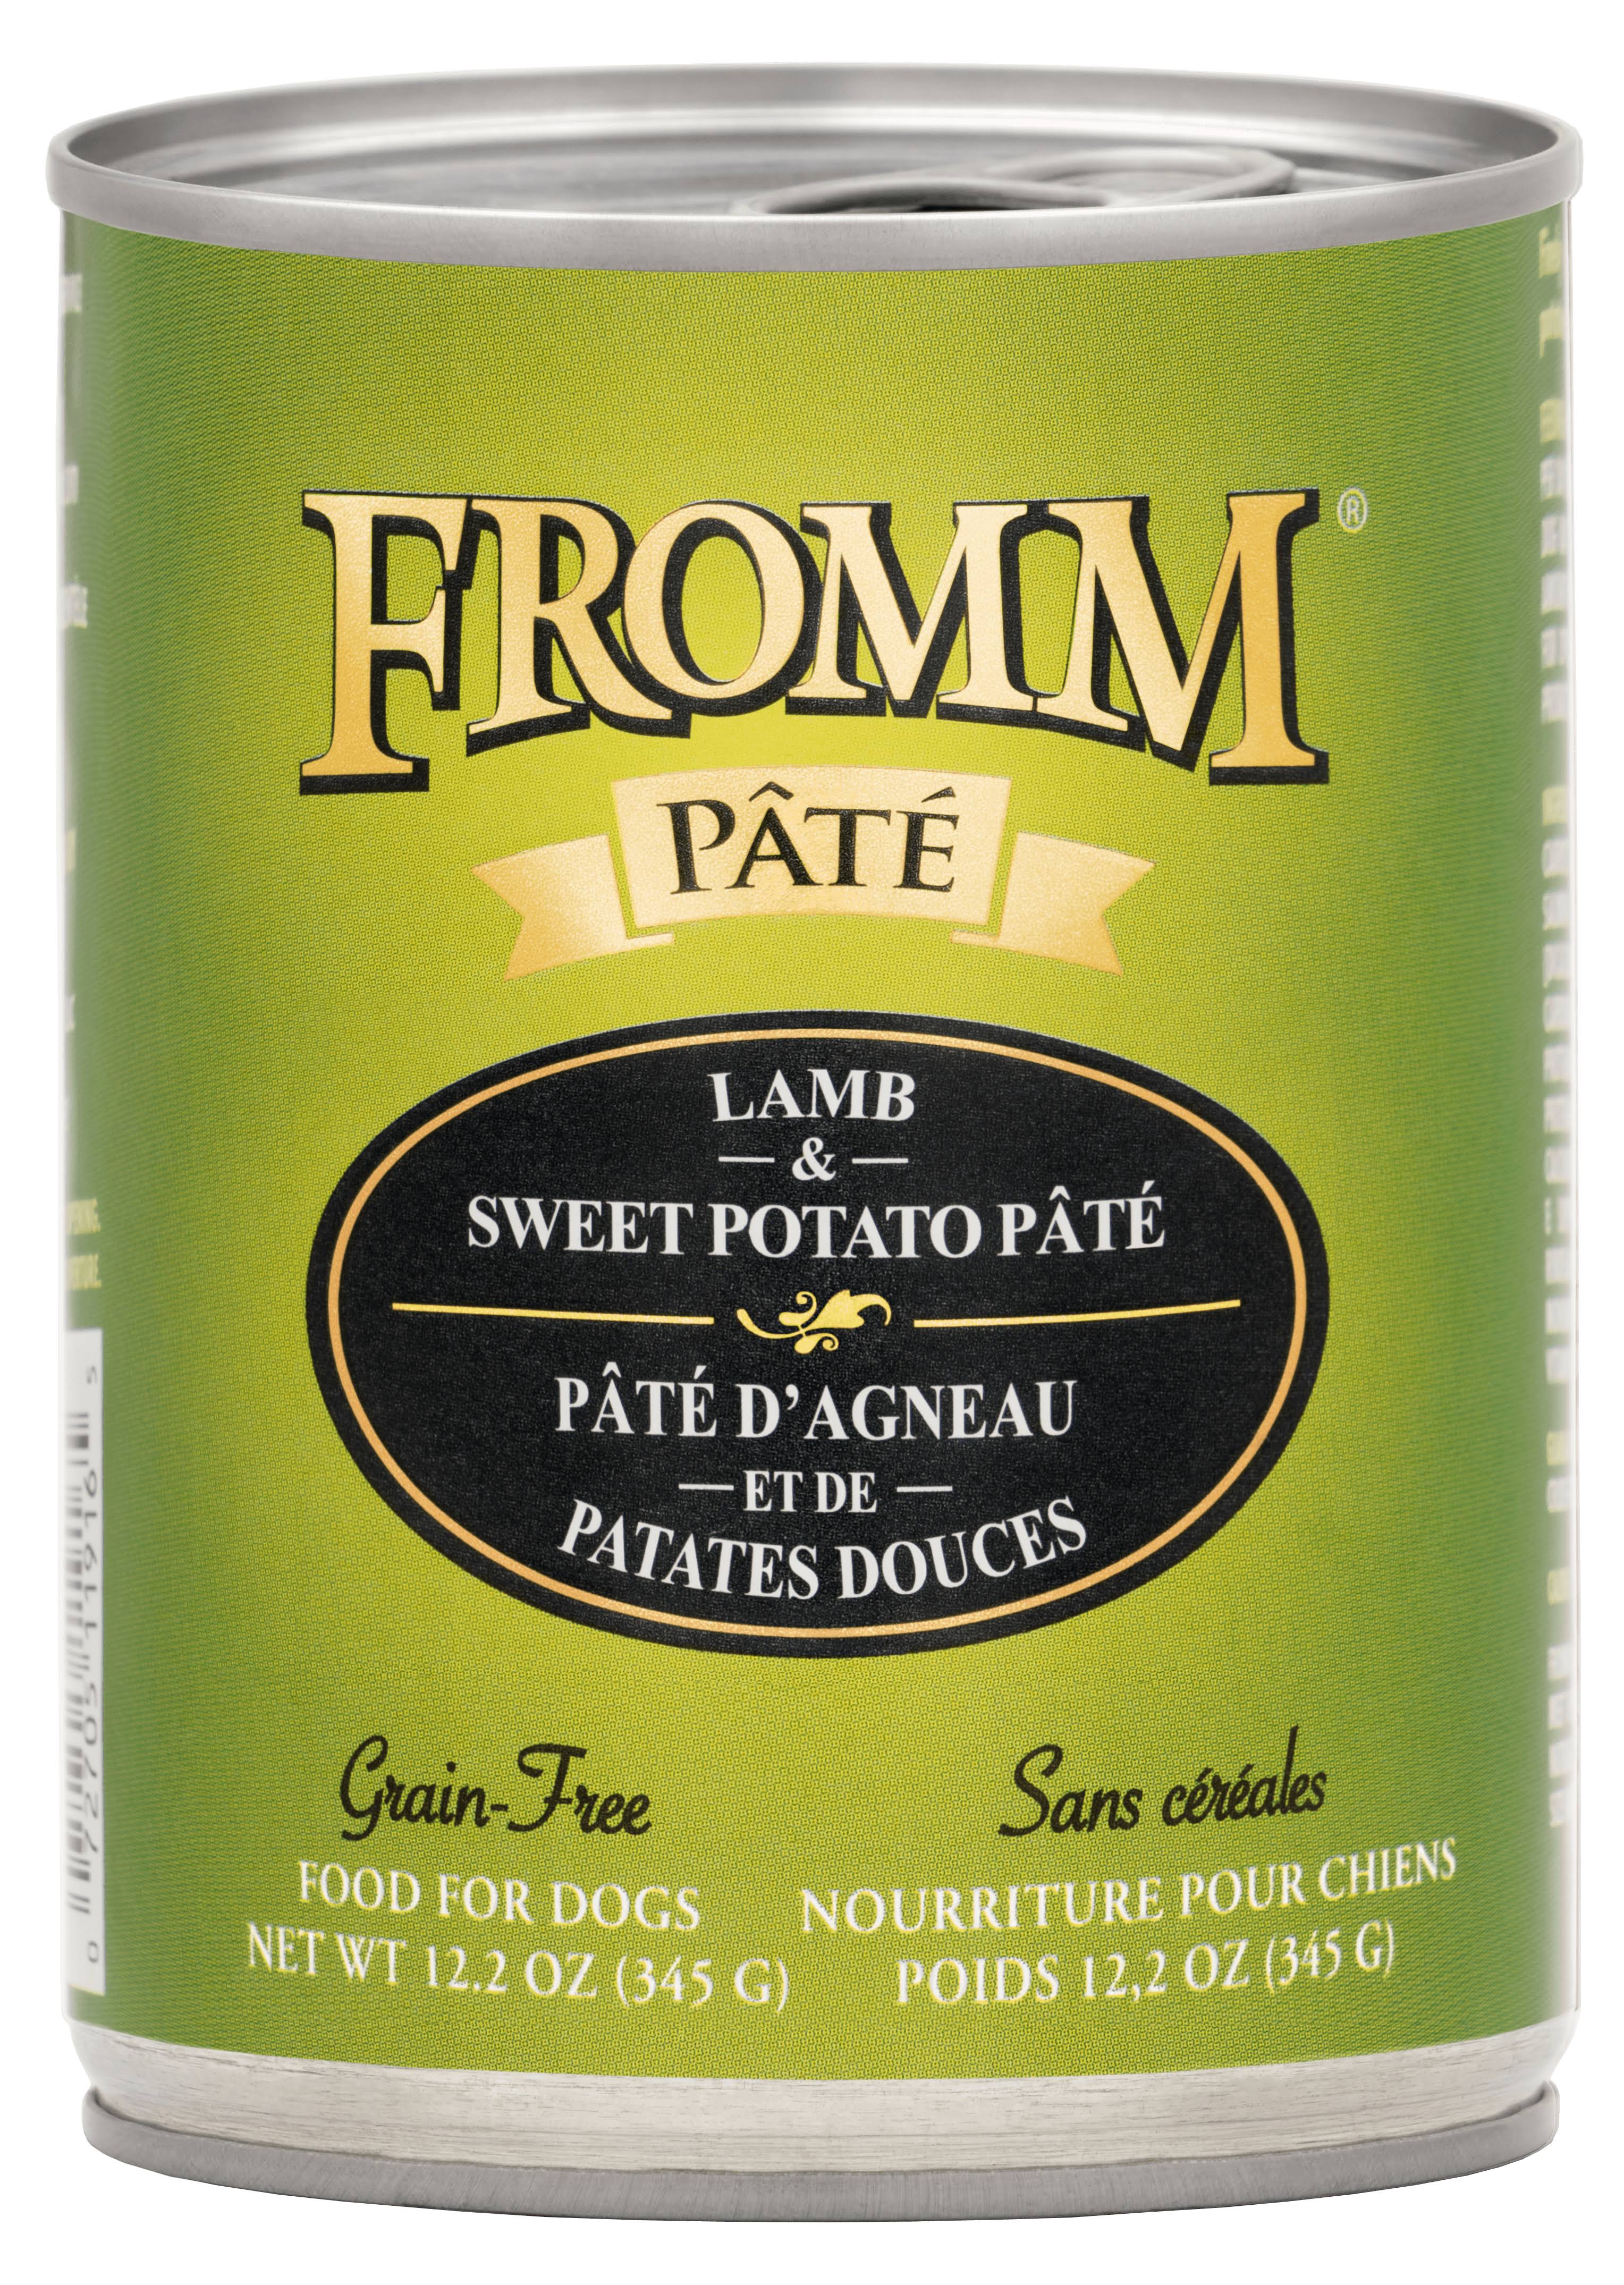 Fromm Grain Free Lamb & Sweet Potato Pate Dog Food - 12.2 oz